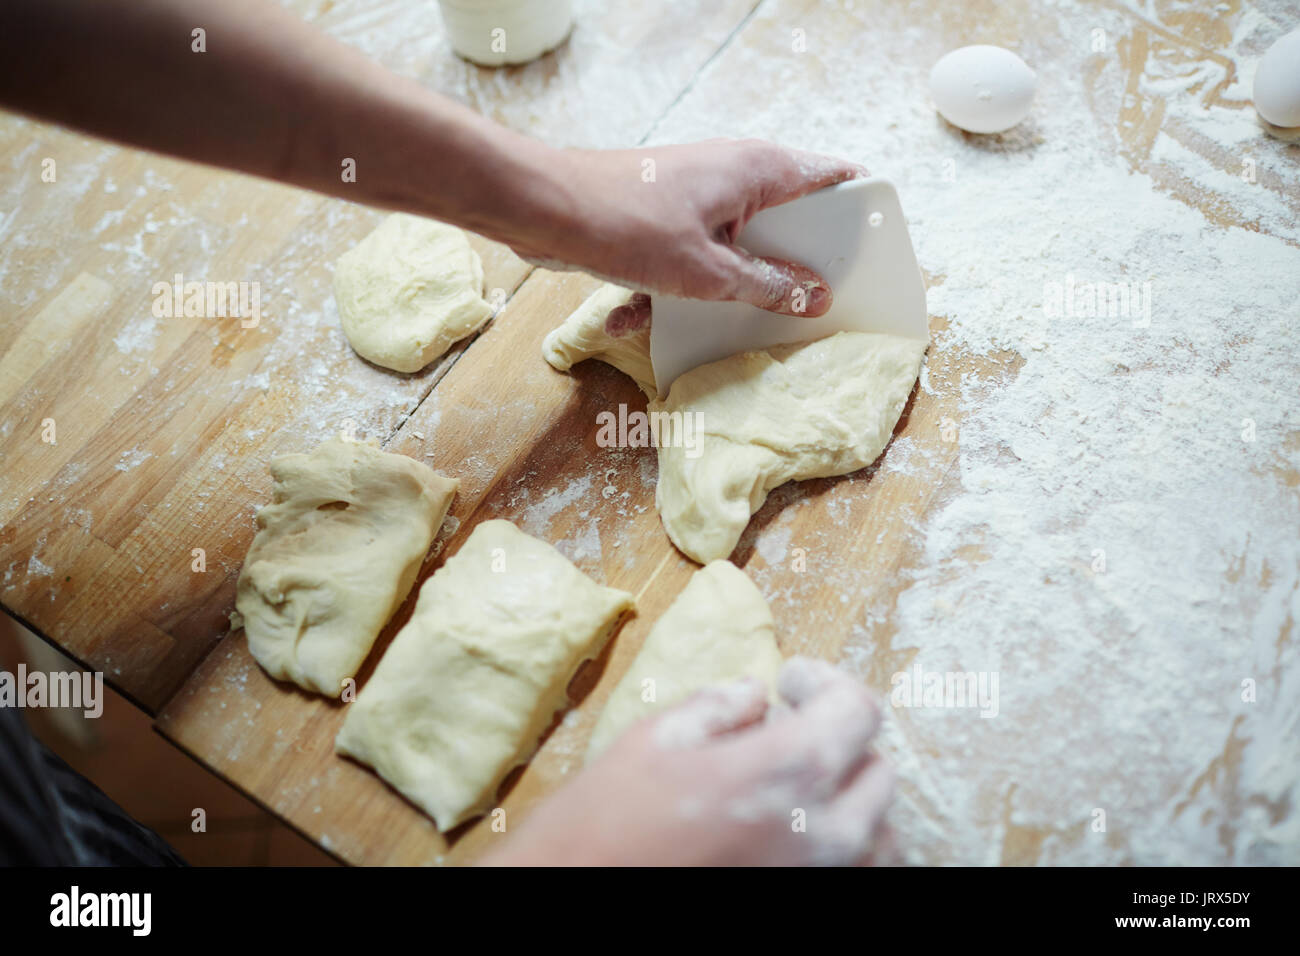 Preparing pastry Stock Photo